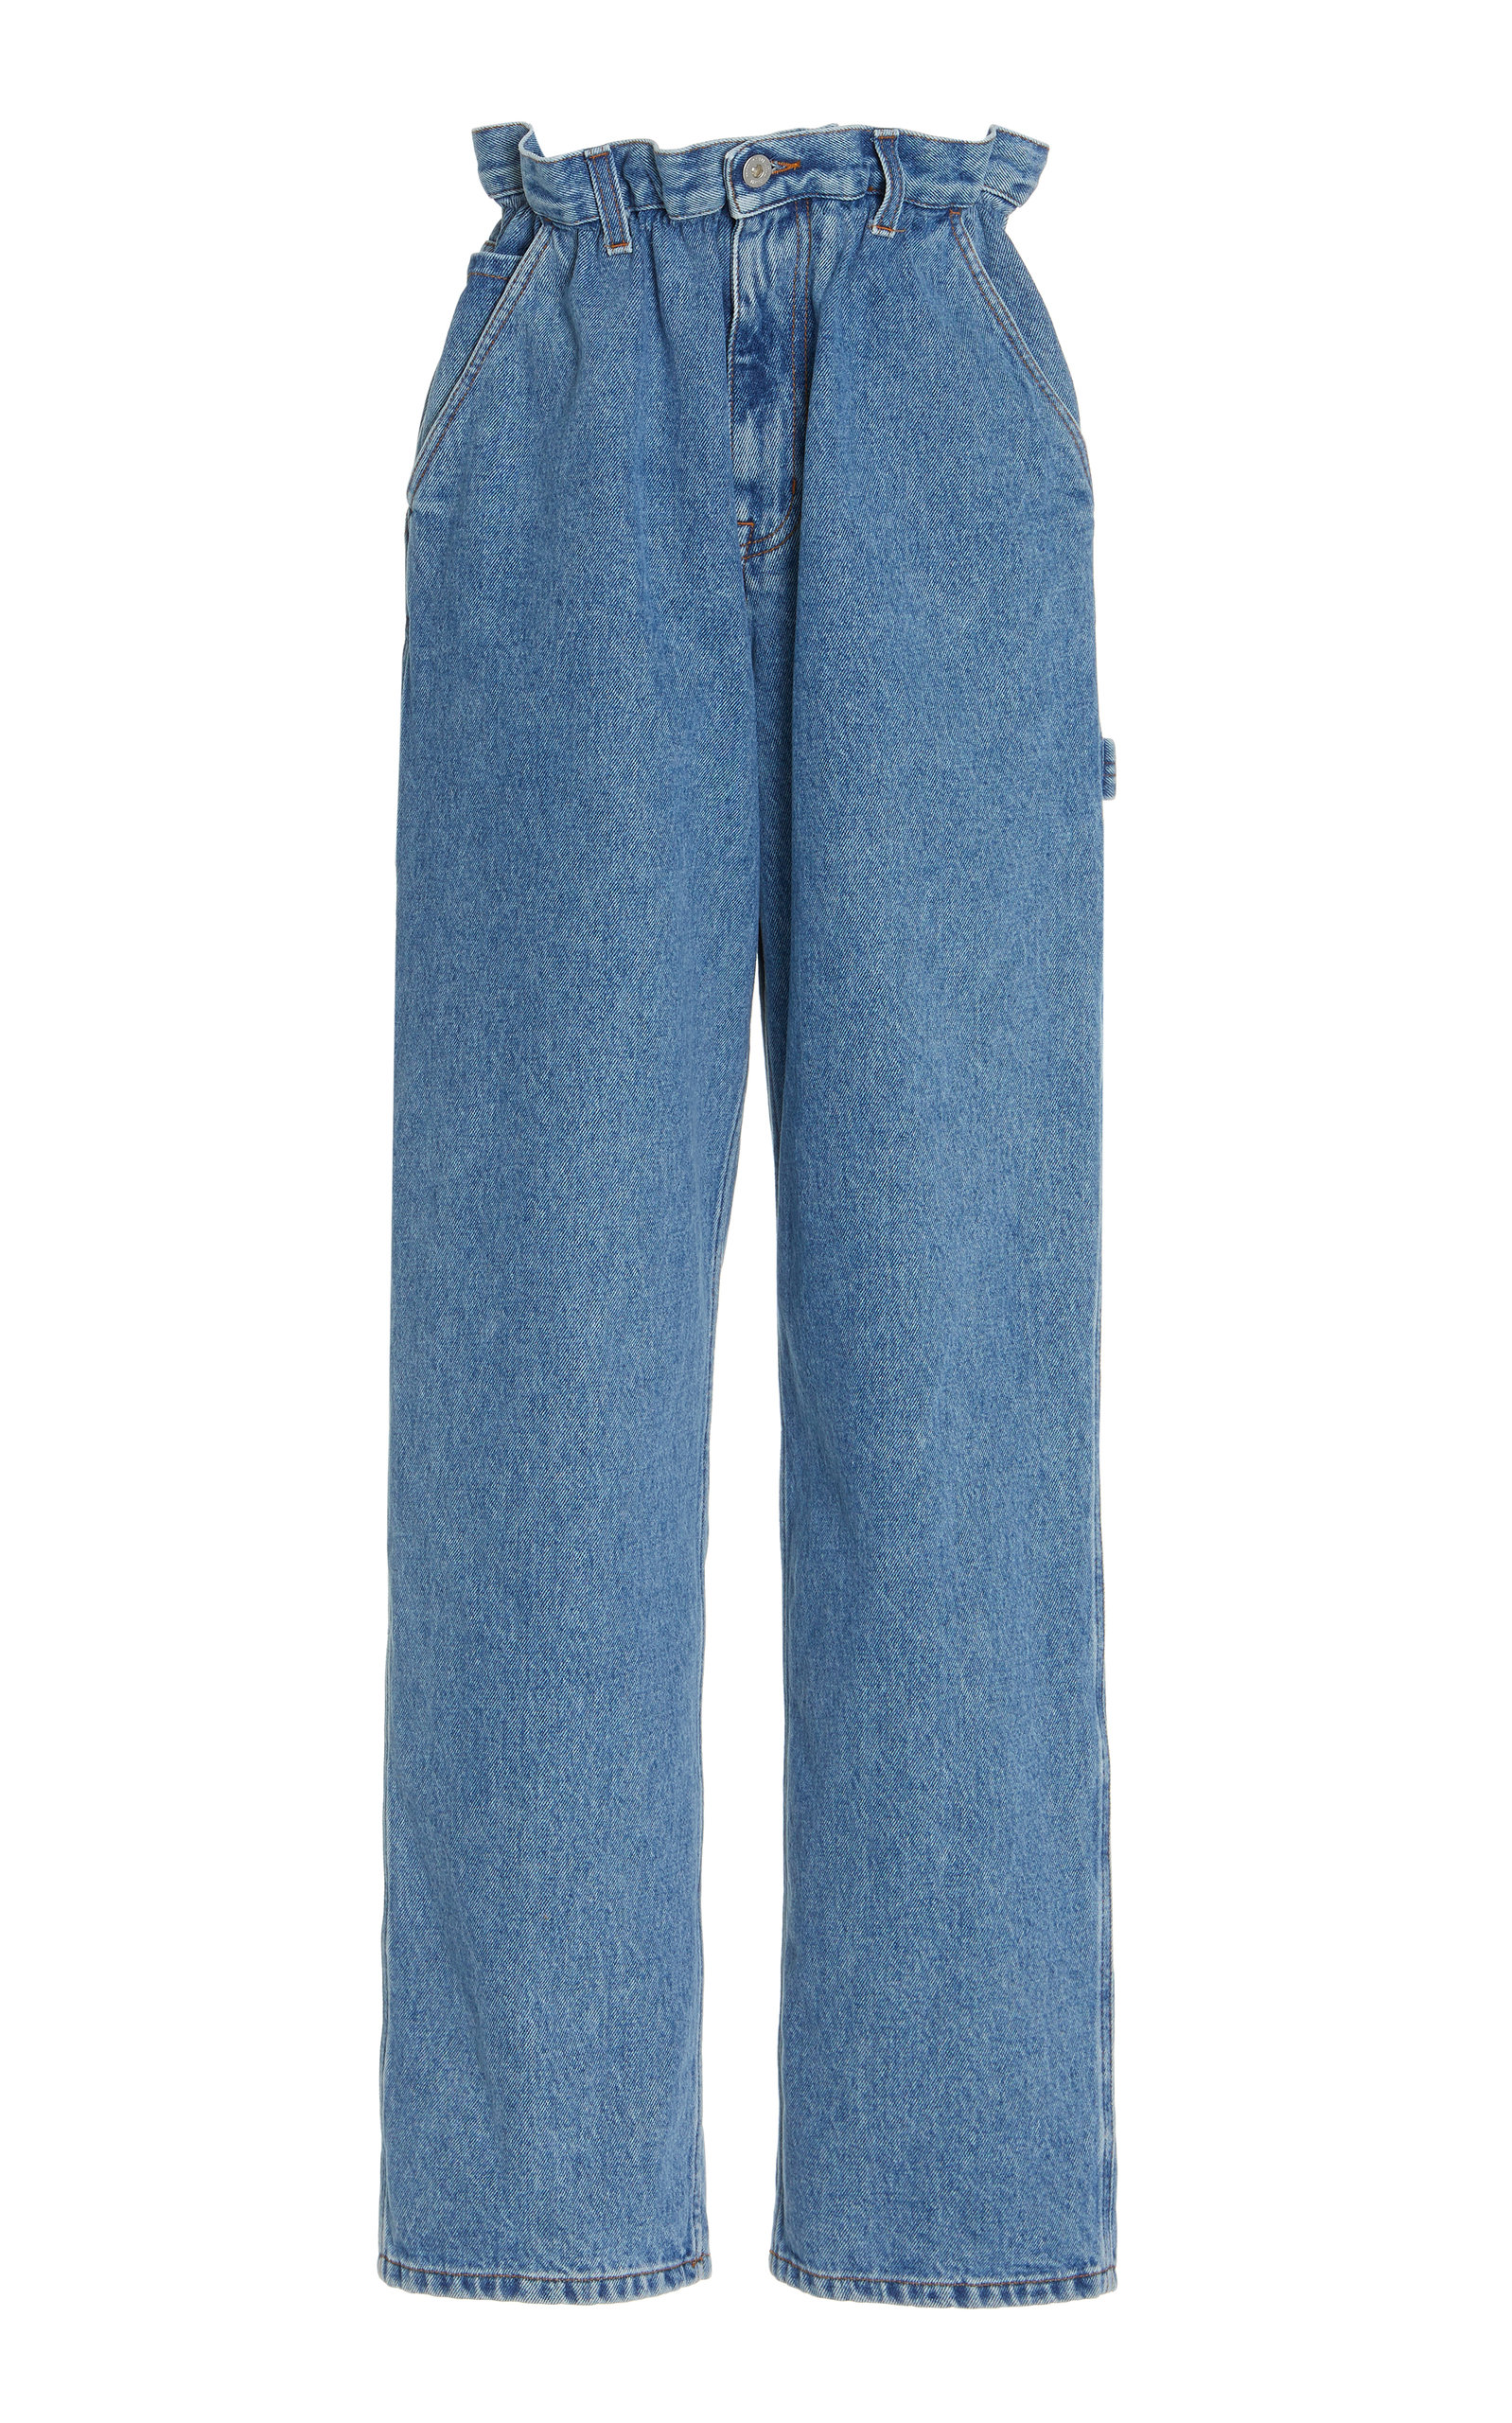 Miu Miu - Women's Iconic Rigid High-Rise Straight-Leg Blue Jeans - Medium Wash - Moda Operandi